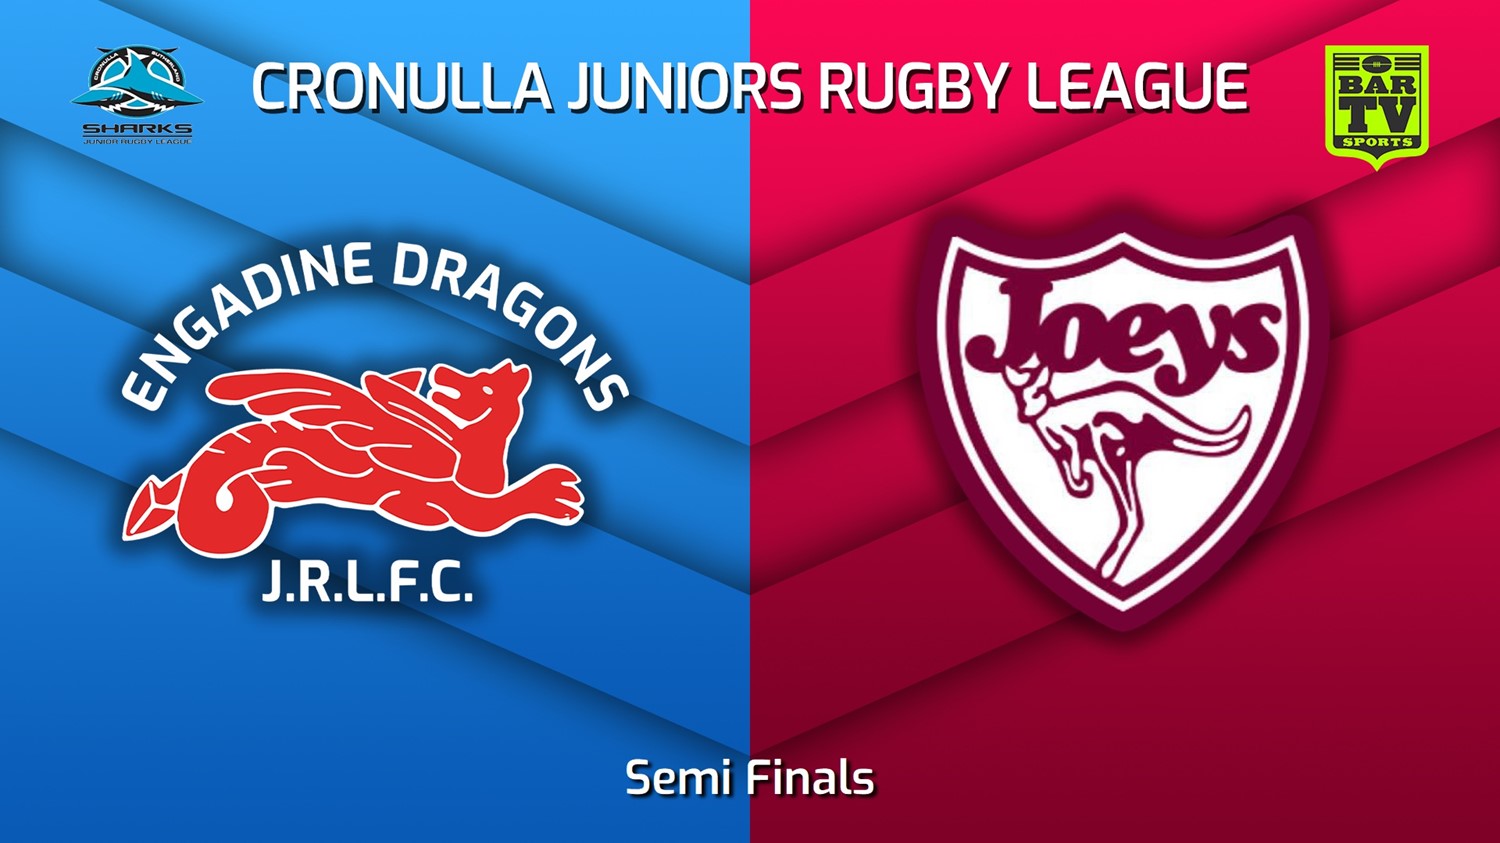 230819-Cronulla Juniors Semi Finals - U15 Gold - Engadine Dragons v St Josephs Minigame Slate Image